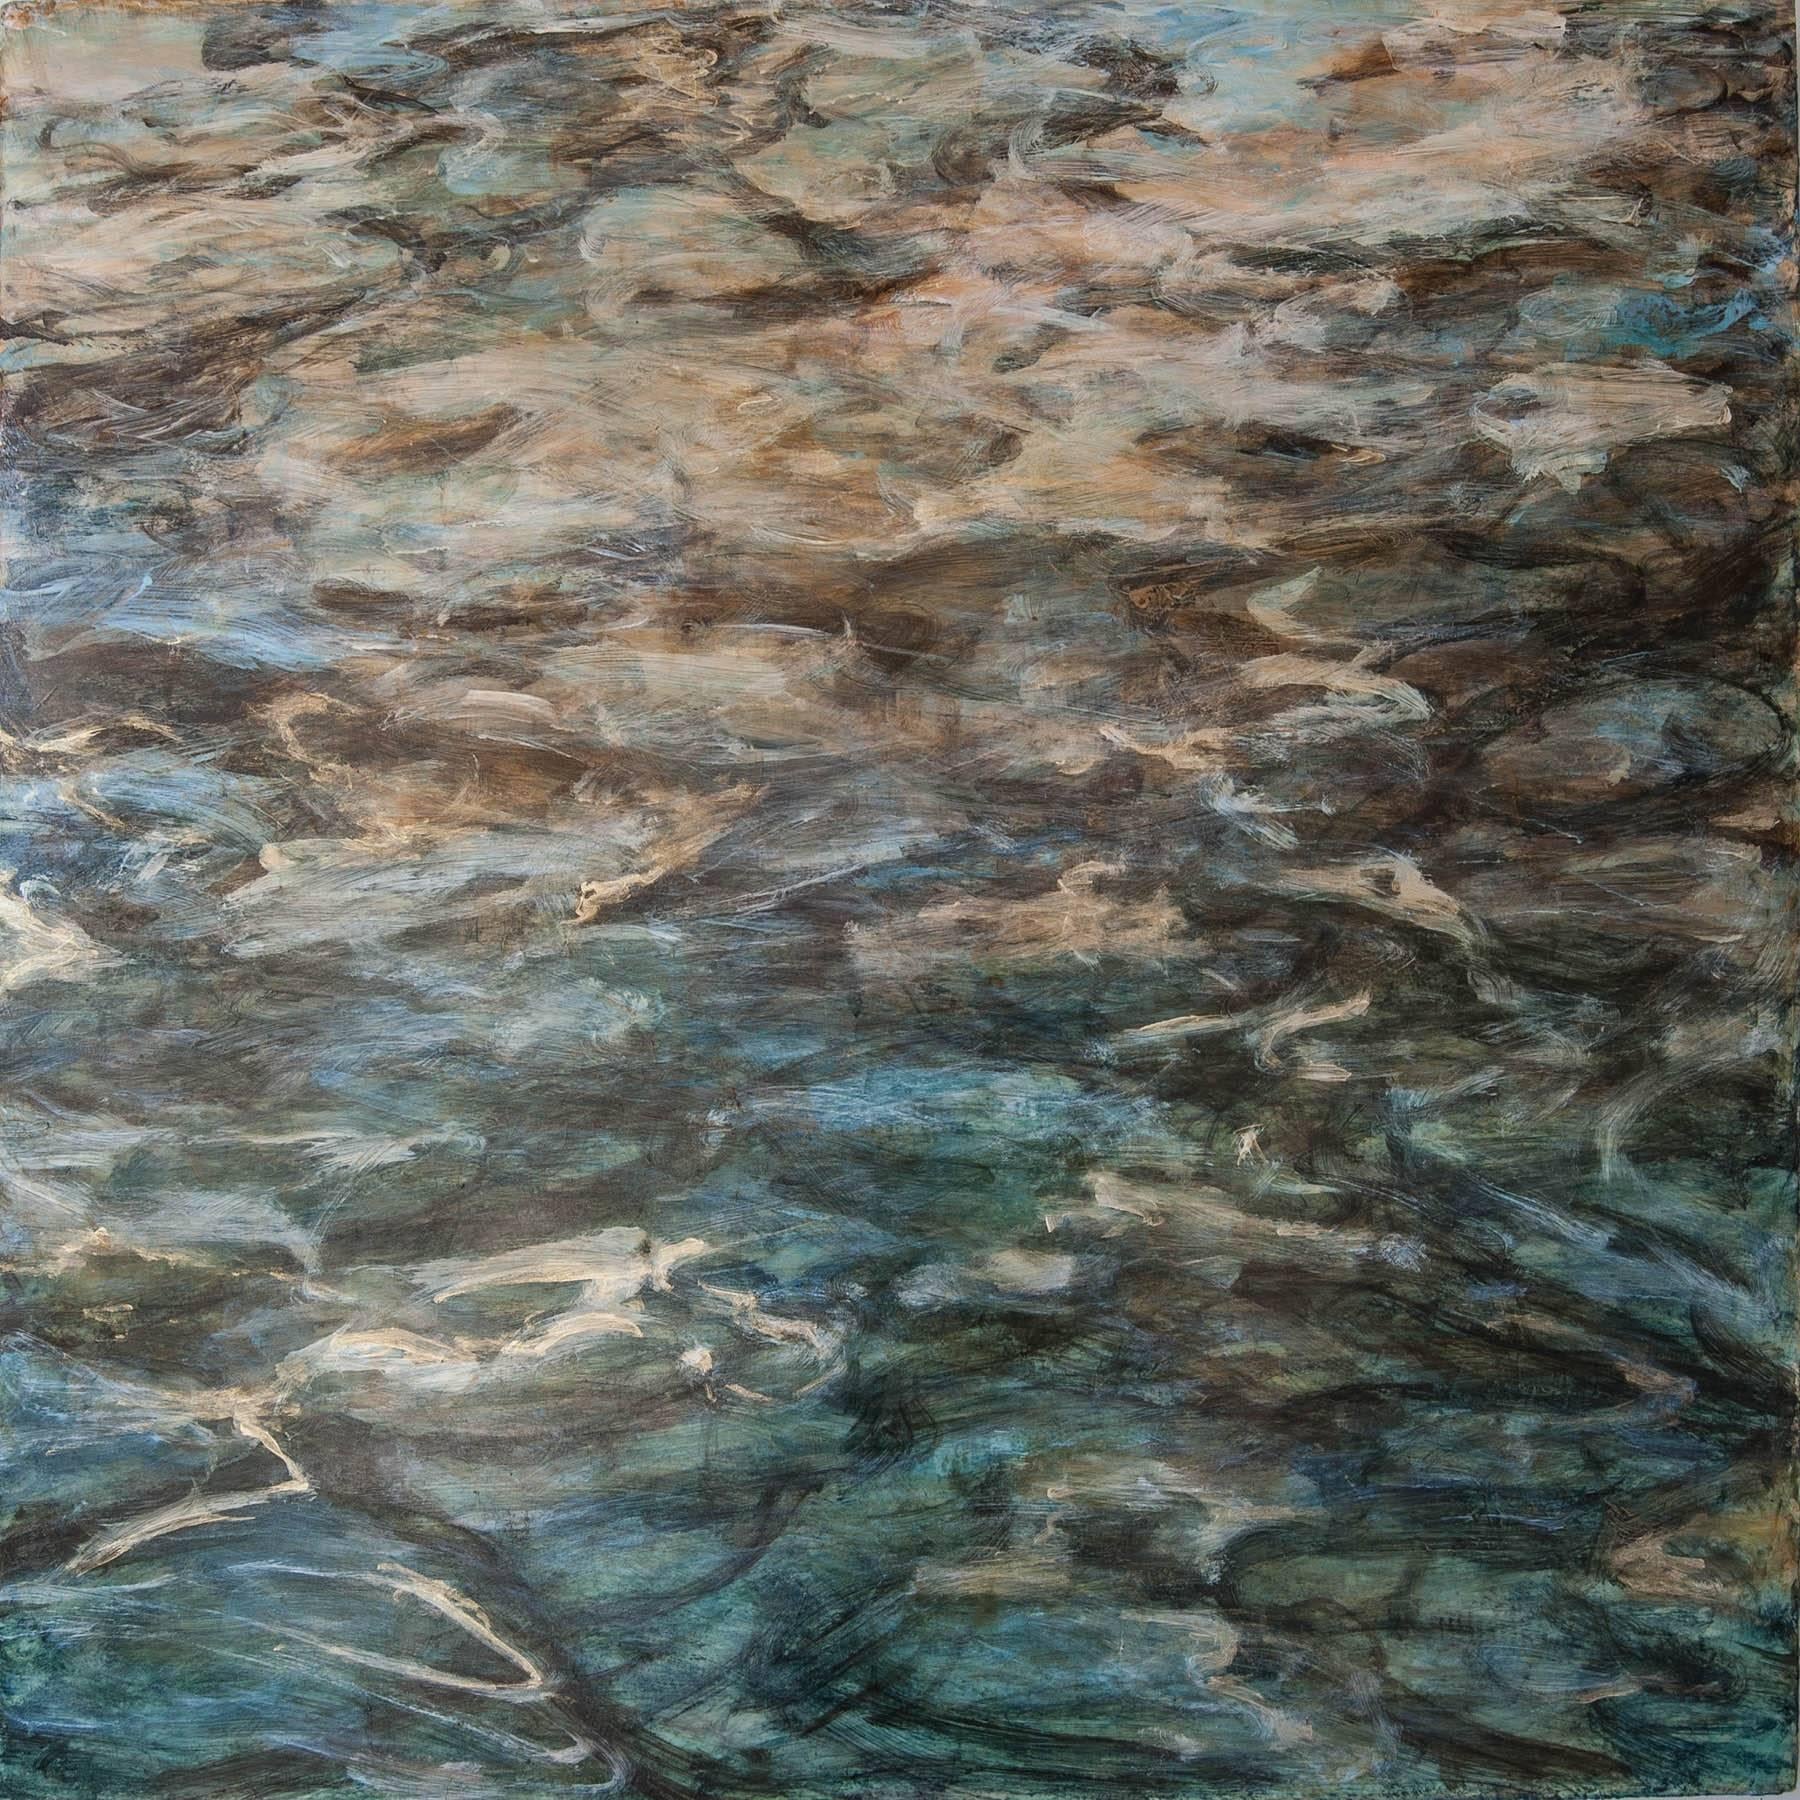 Abstract Painting Cheryl Clinton - "Woodland Water Flood 1", contemporain, abstrait, paysage, peinture acrylique.